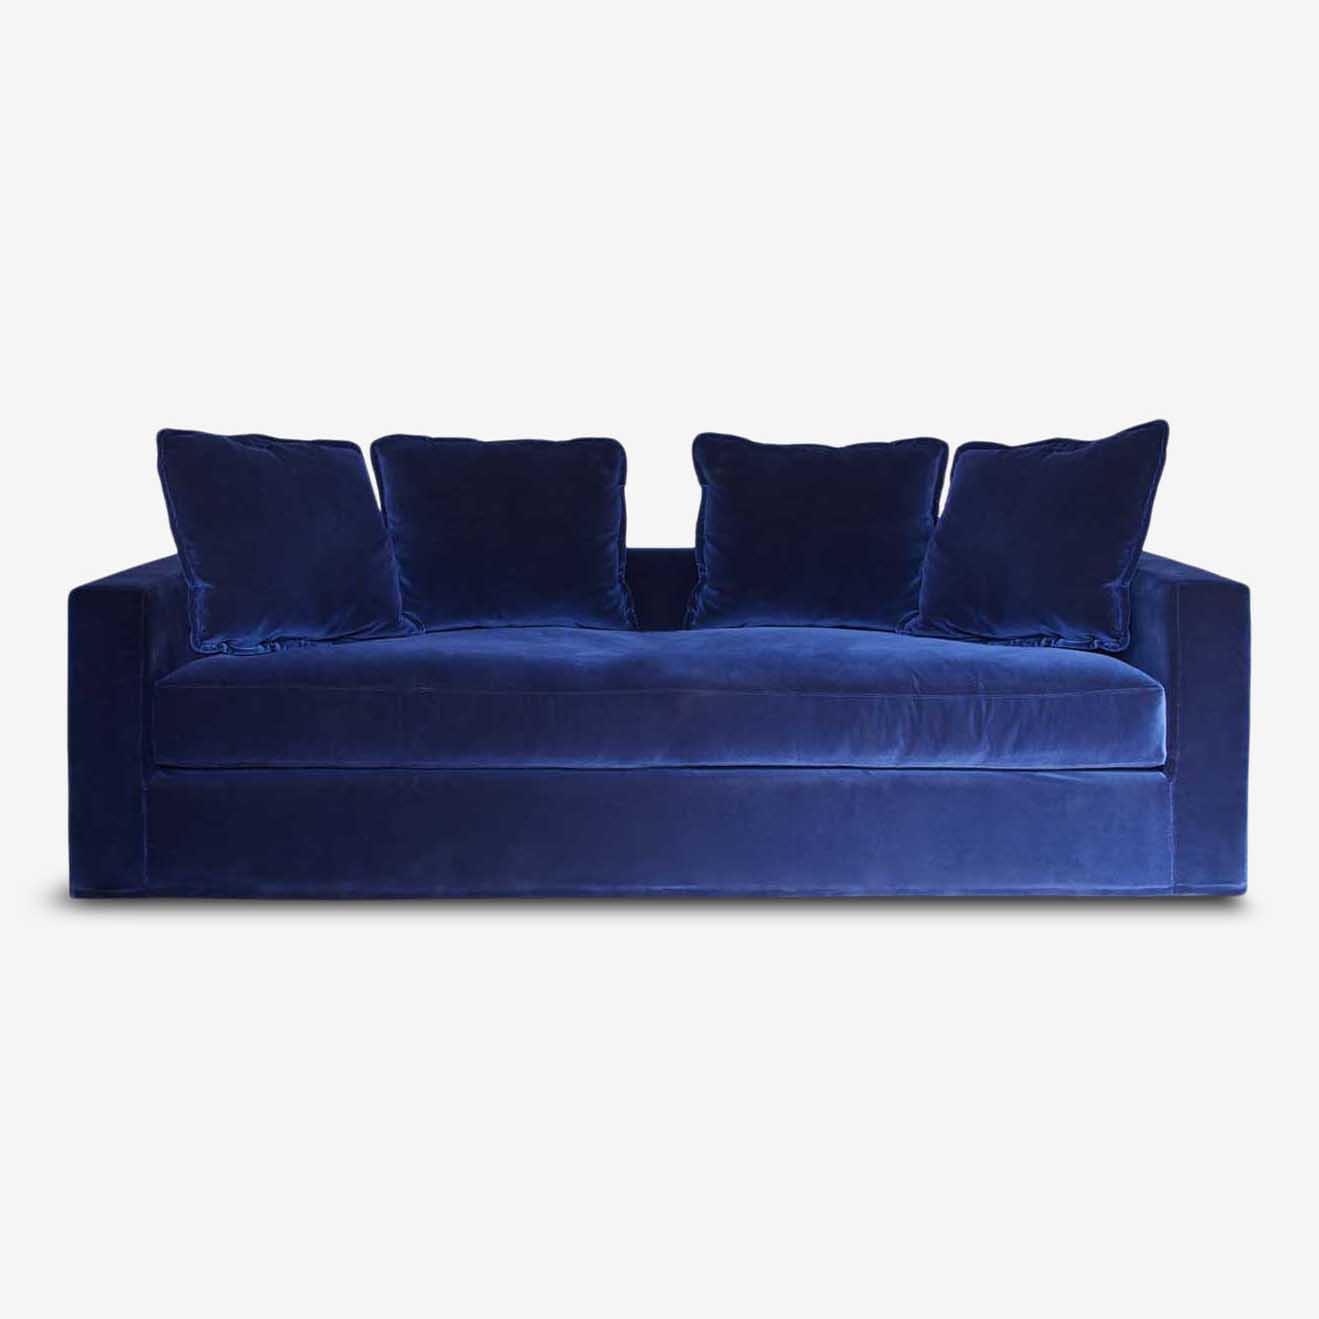 Lively Cotton Velvet Tones, twoseater sofa handmade in italy